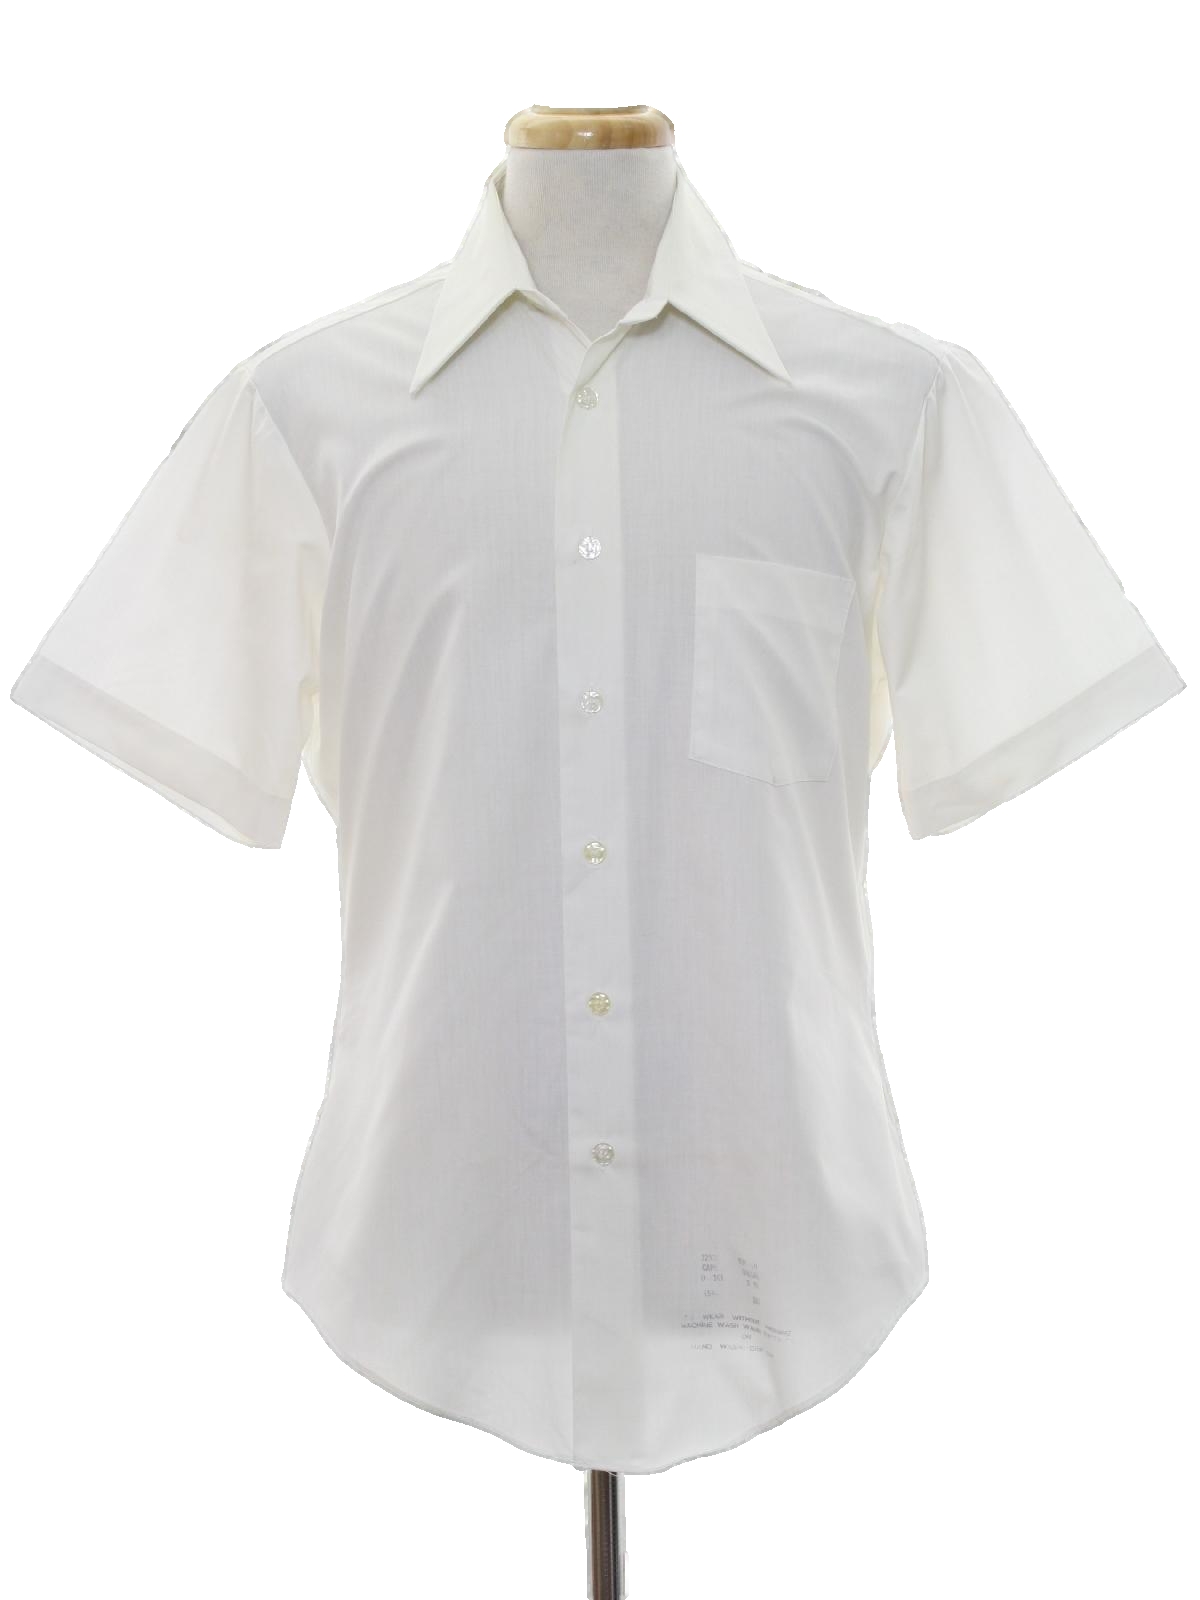 Retro 1960s Shirt: Late 60s -Sears Dress Shirt- Mens white polyester ...